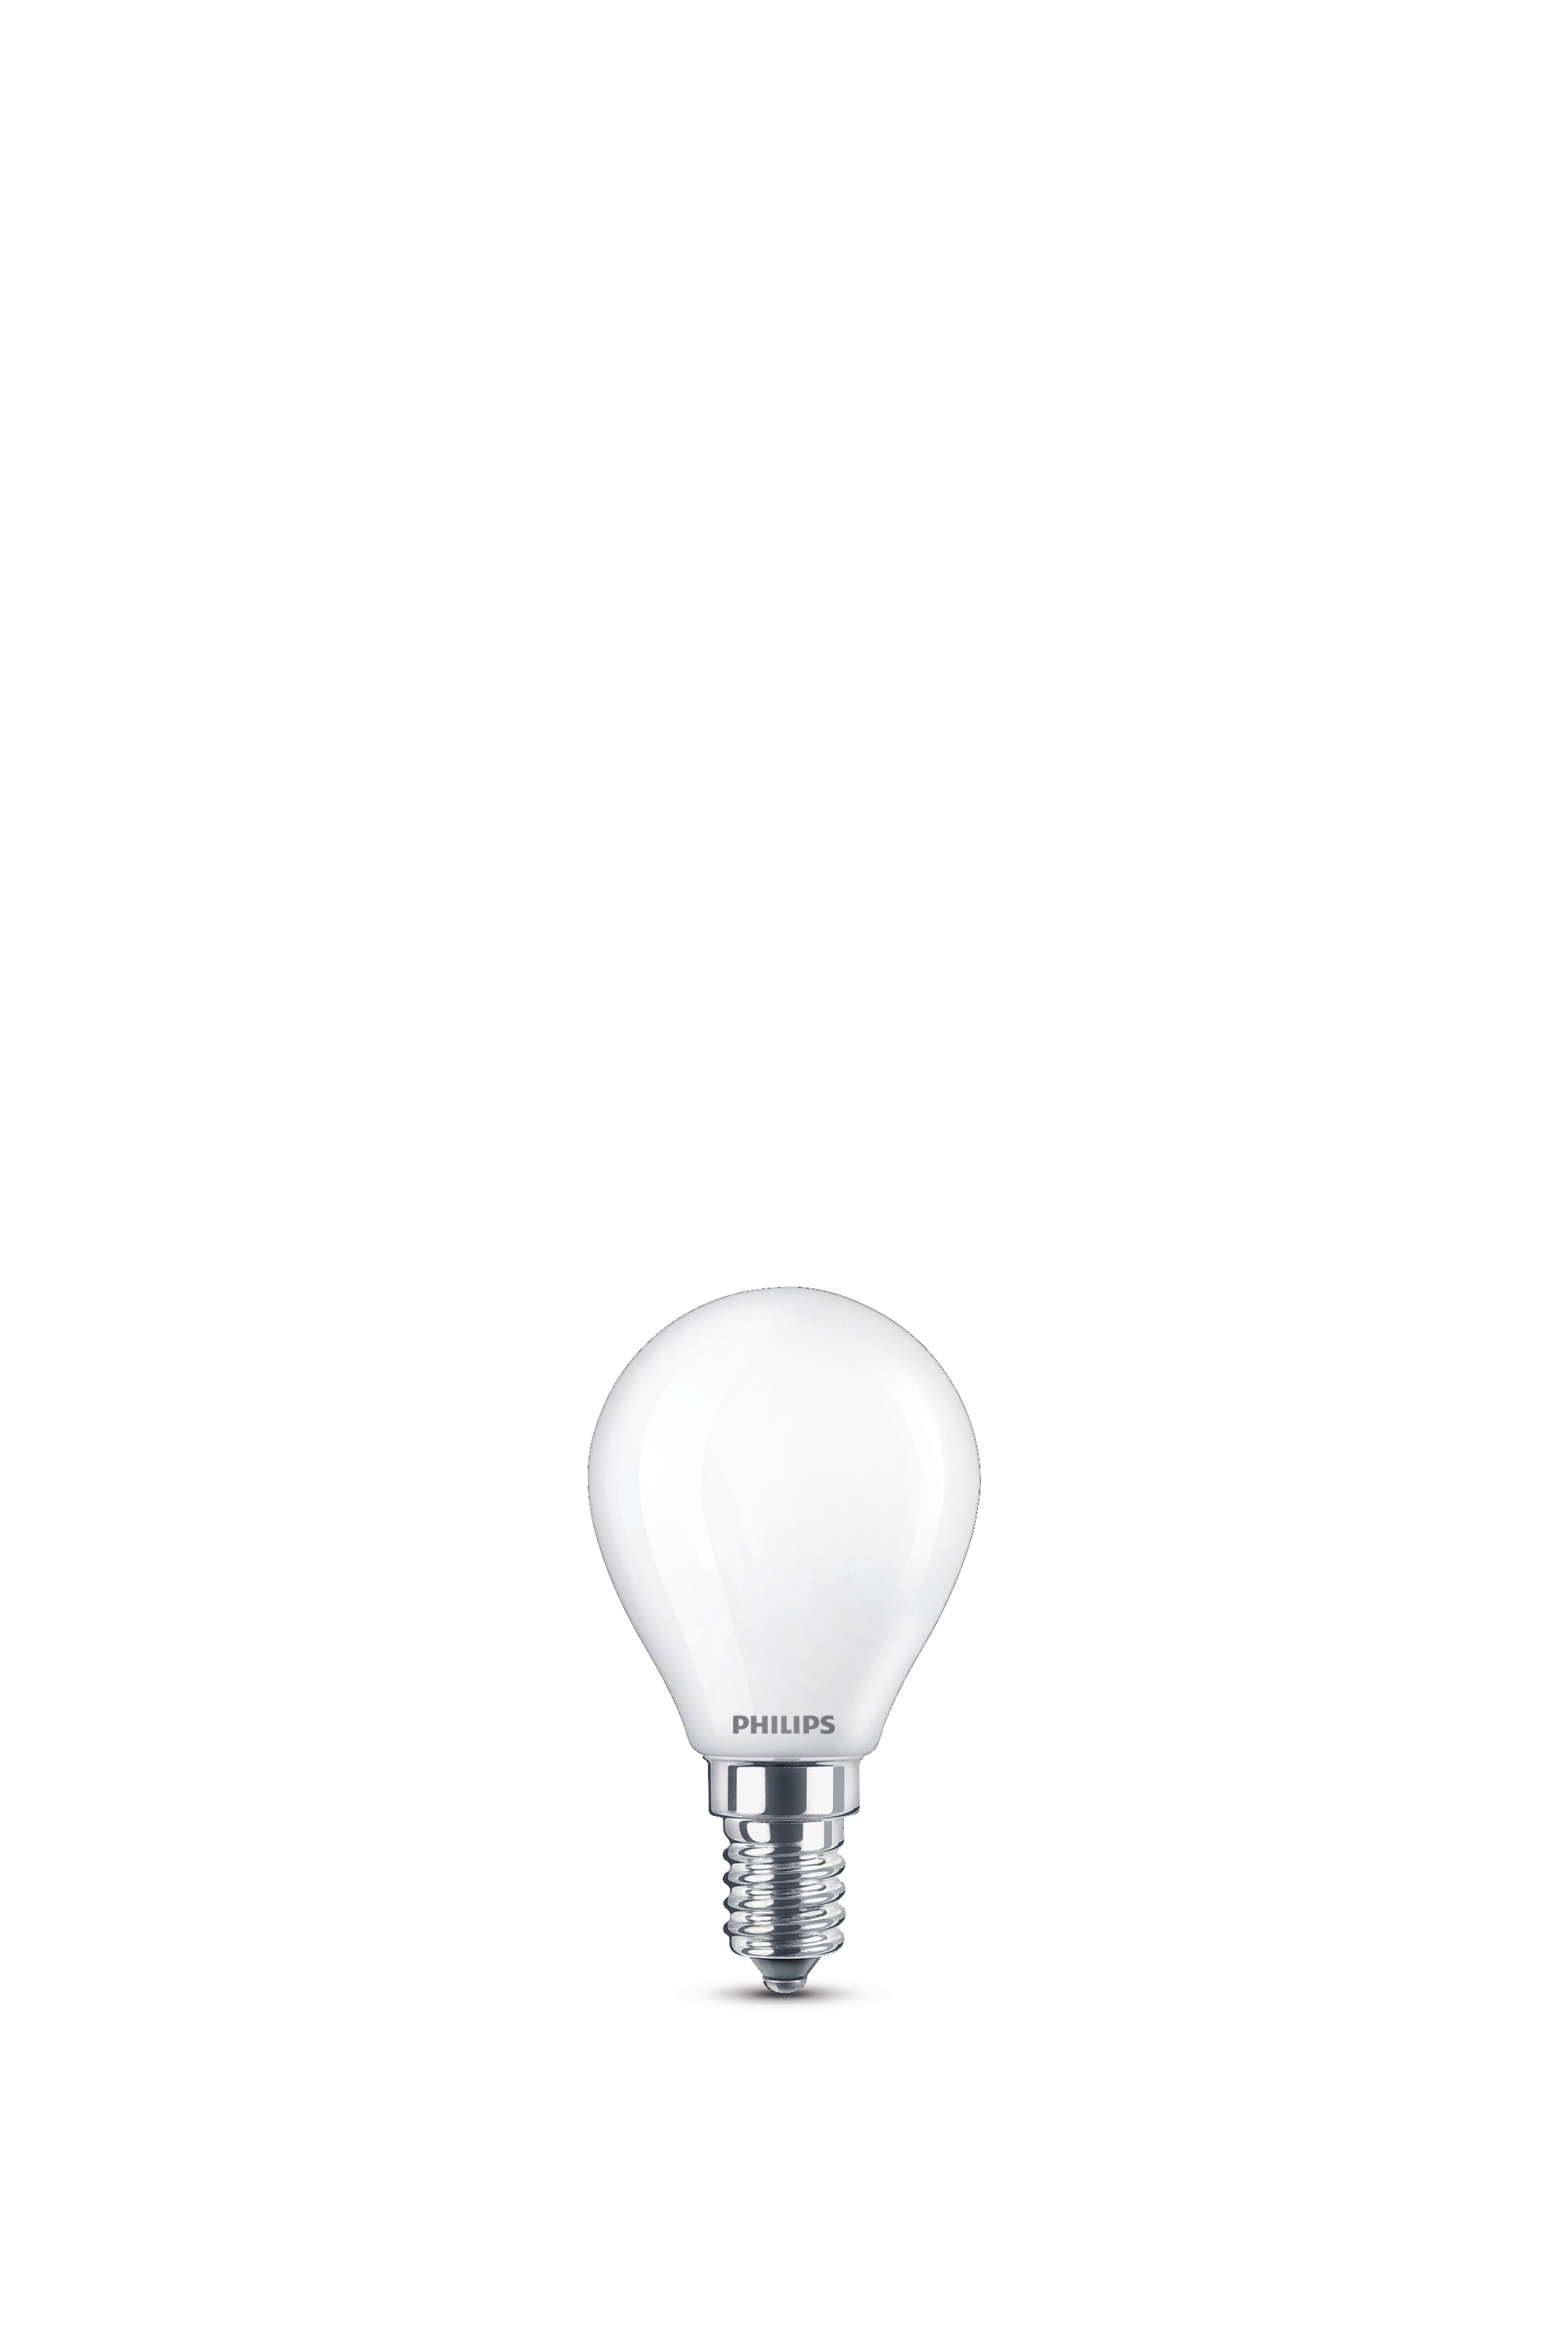 PHILIPS LEDclassic Lampe ersetzt 40W kaltweiß LED Lampe